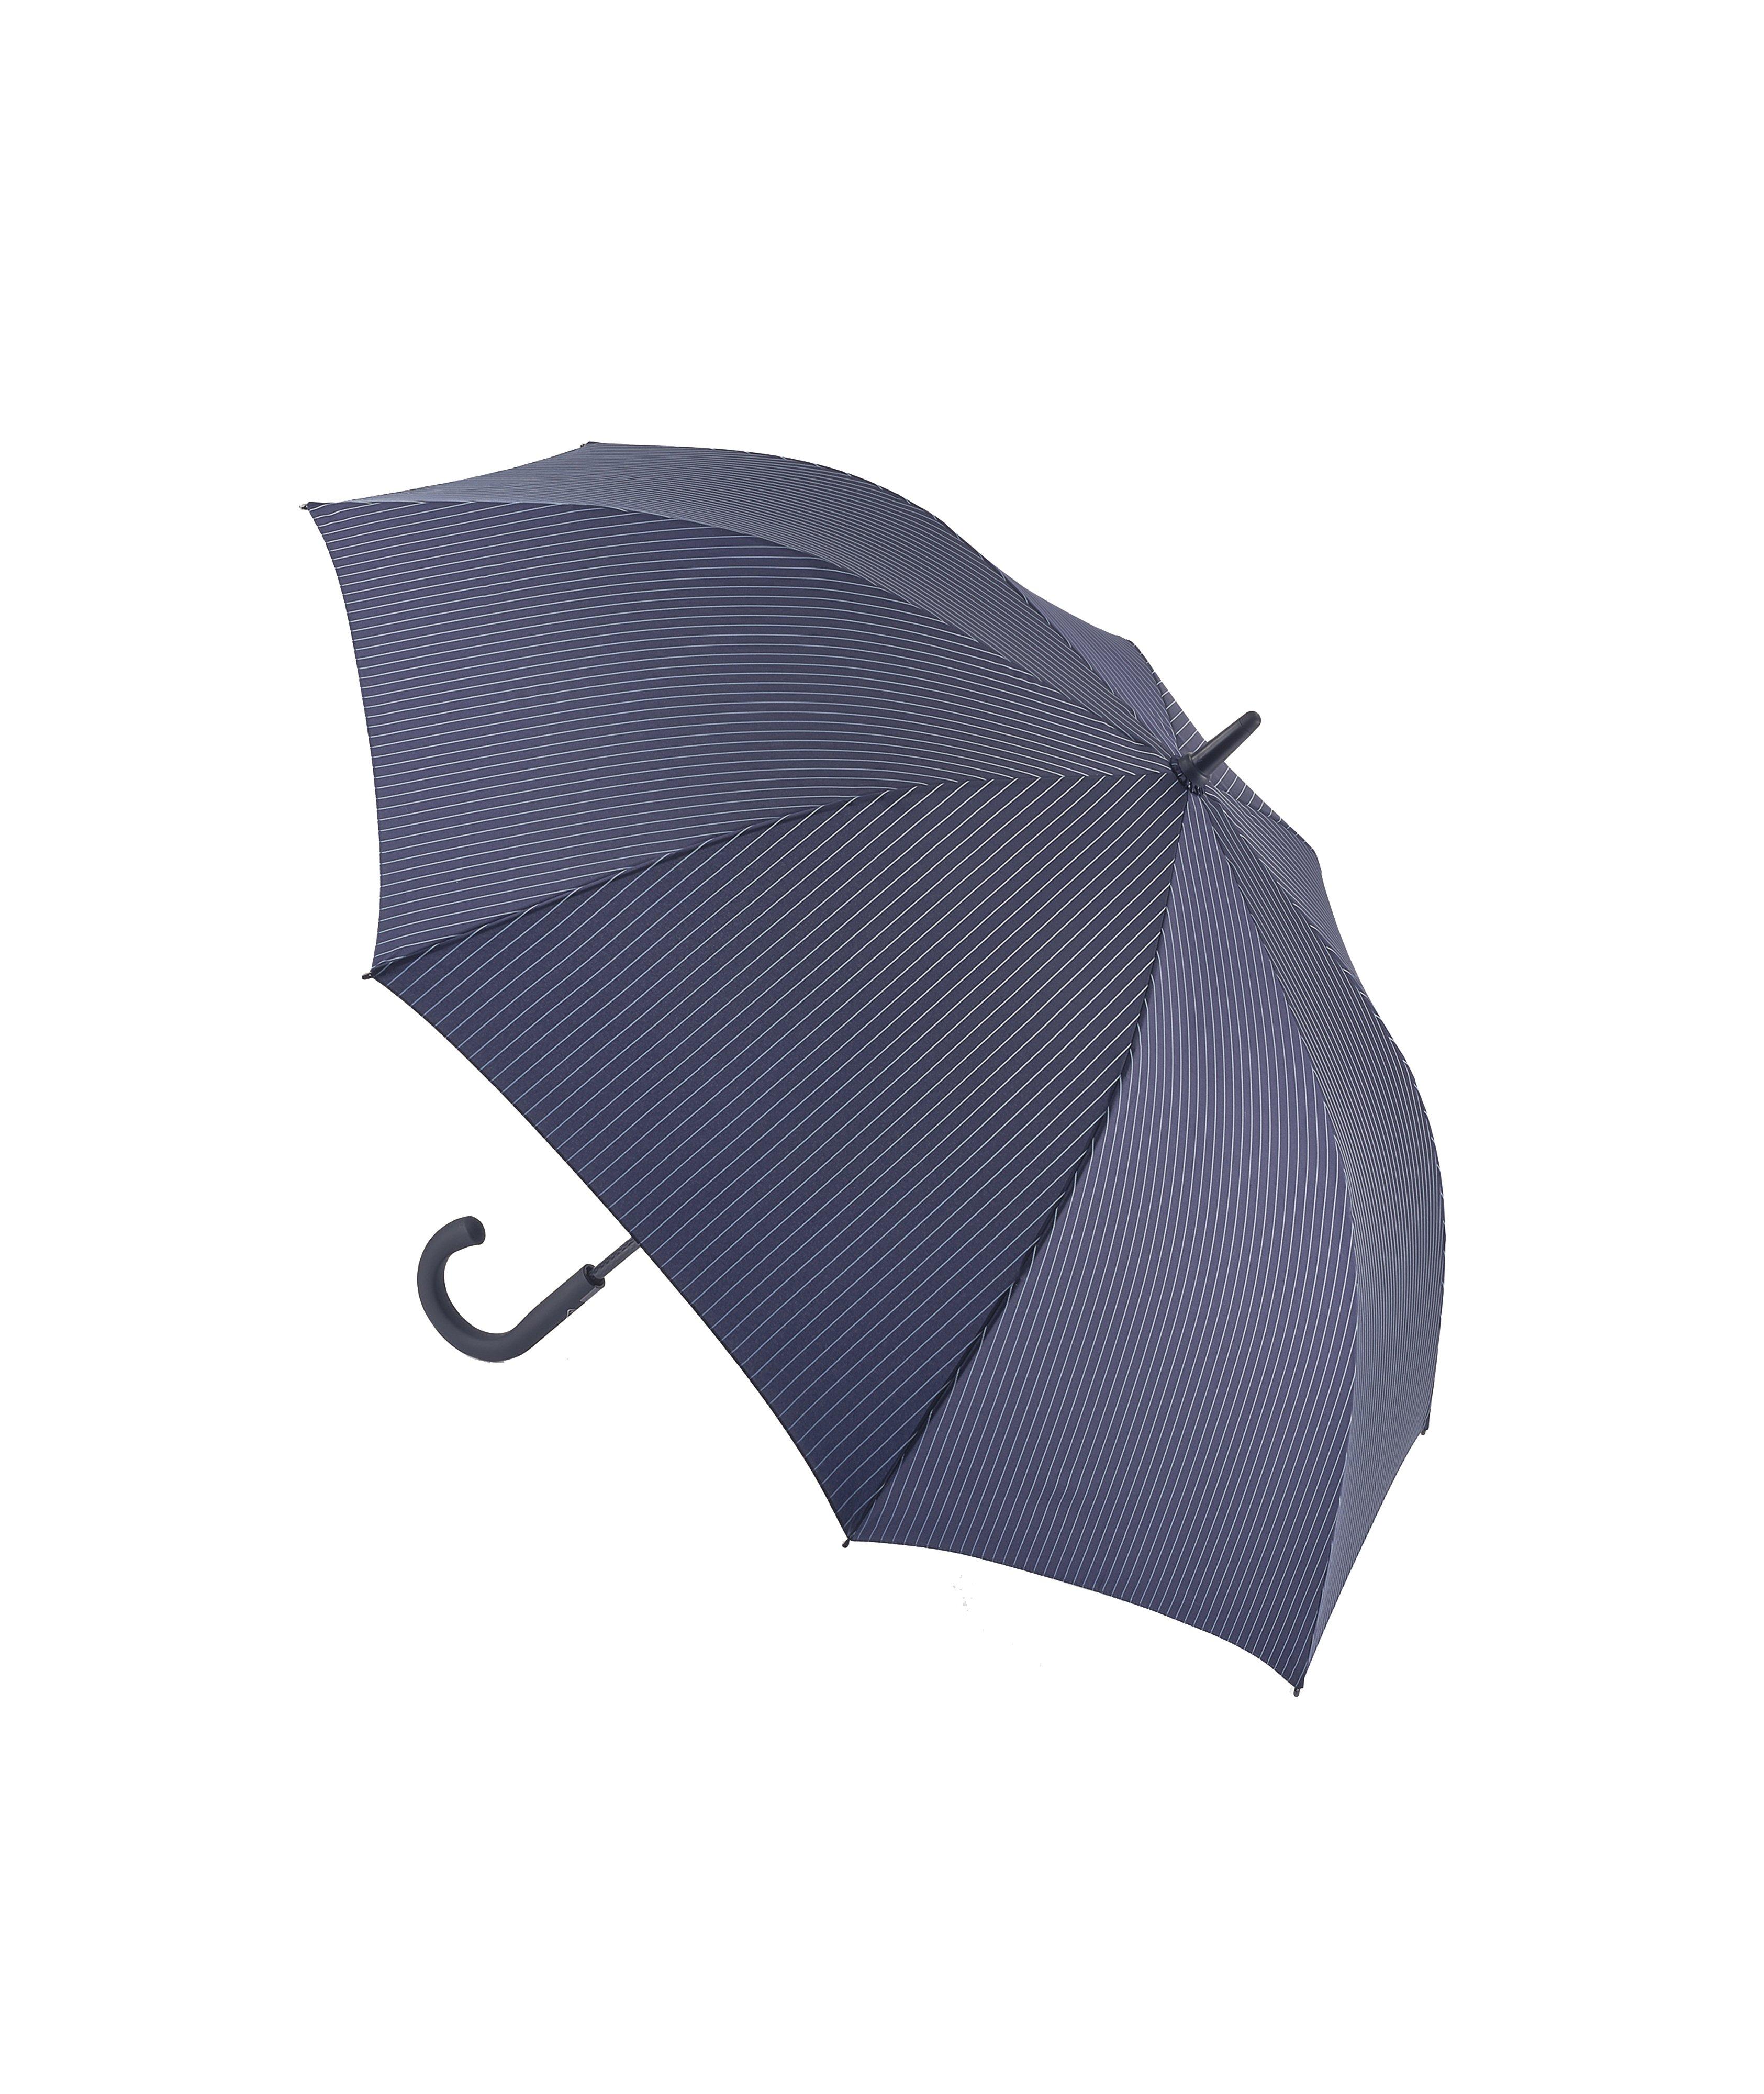 Knightsbridge 2 Umbrella image 0